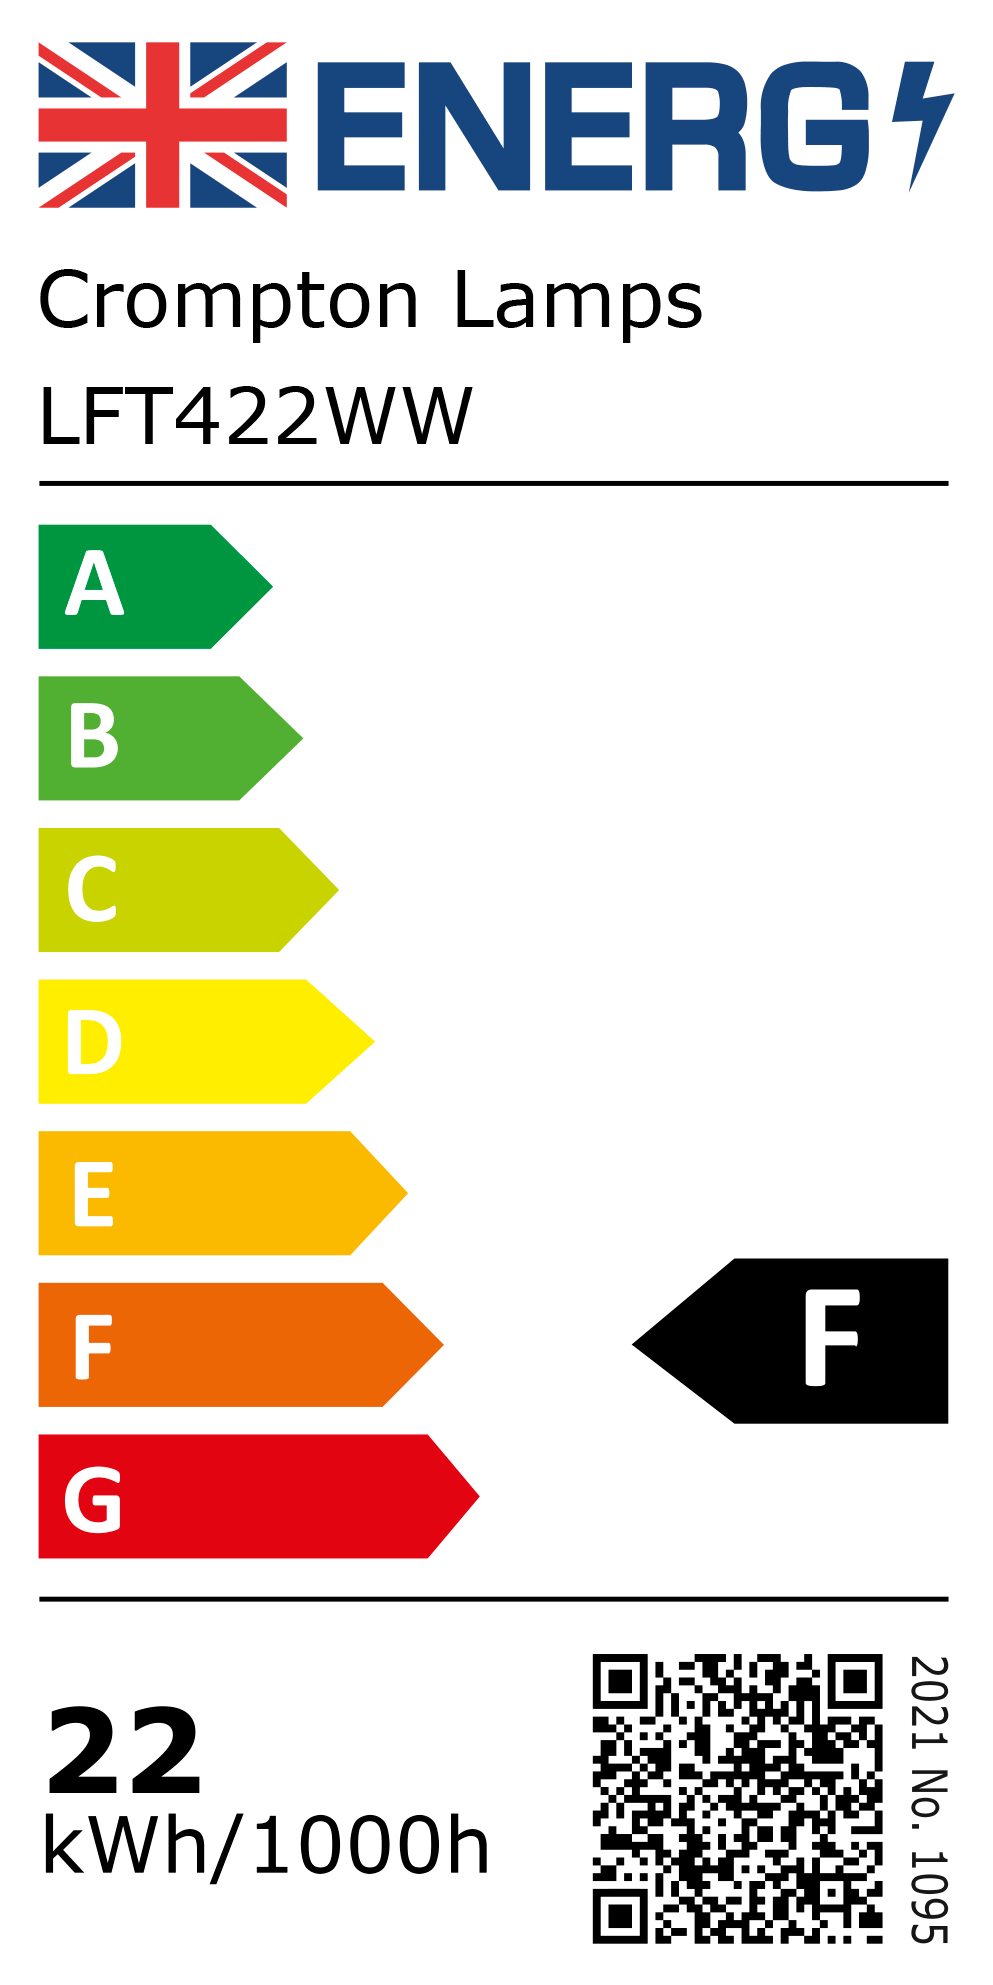 New 2021 Energy Rating Label: Stock Code LFT422WW